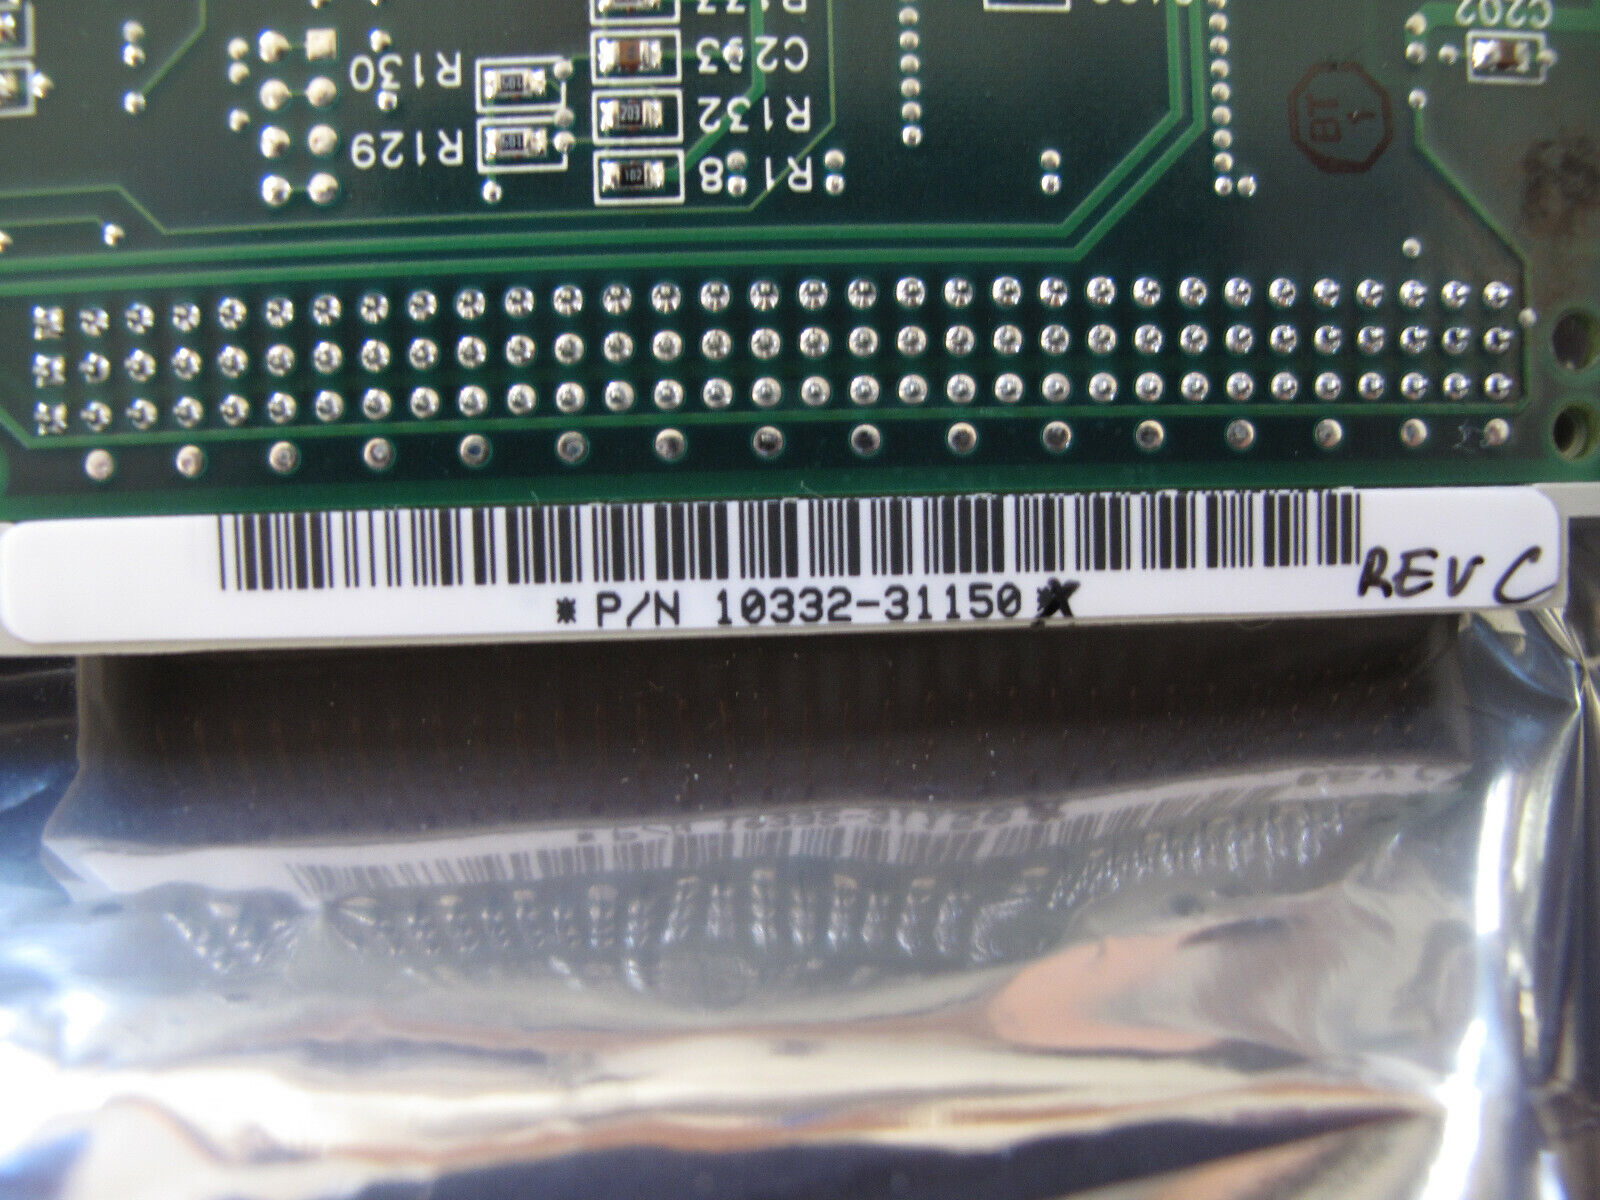 Adept Robot Controller CPU Micro Processor Module IDE 030 P/N 10332-31150 Rev. C